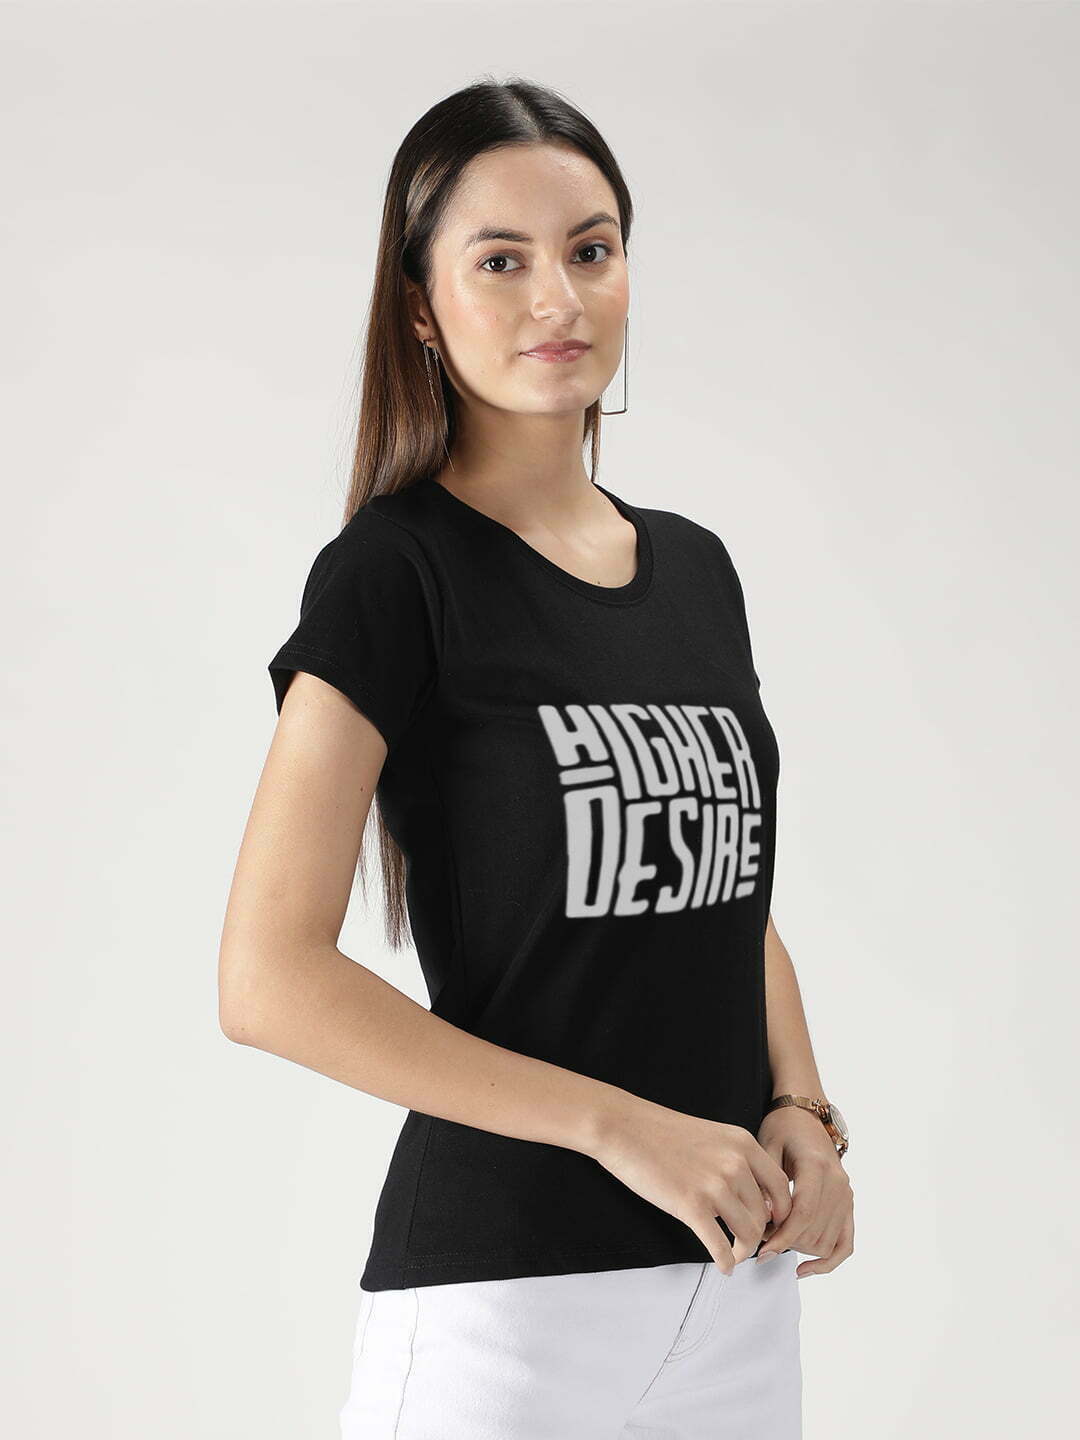 Higher Desire Graphic Full T-Shirt